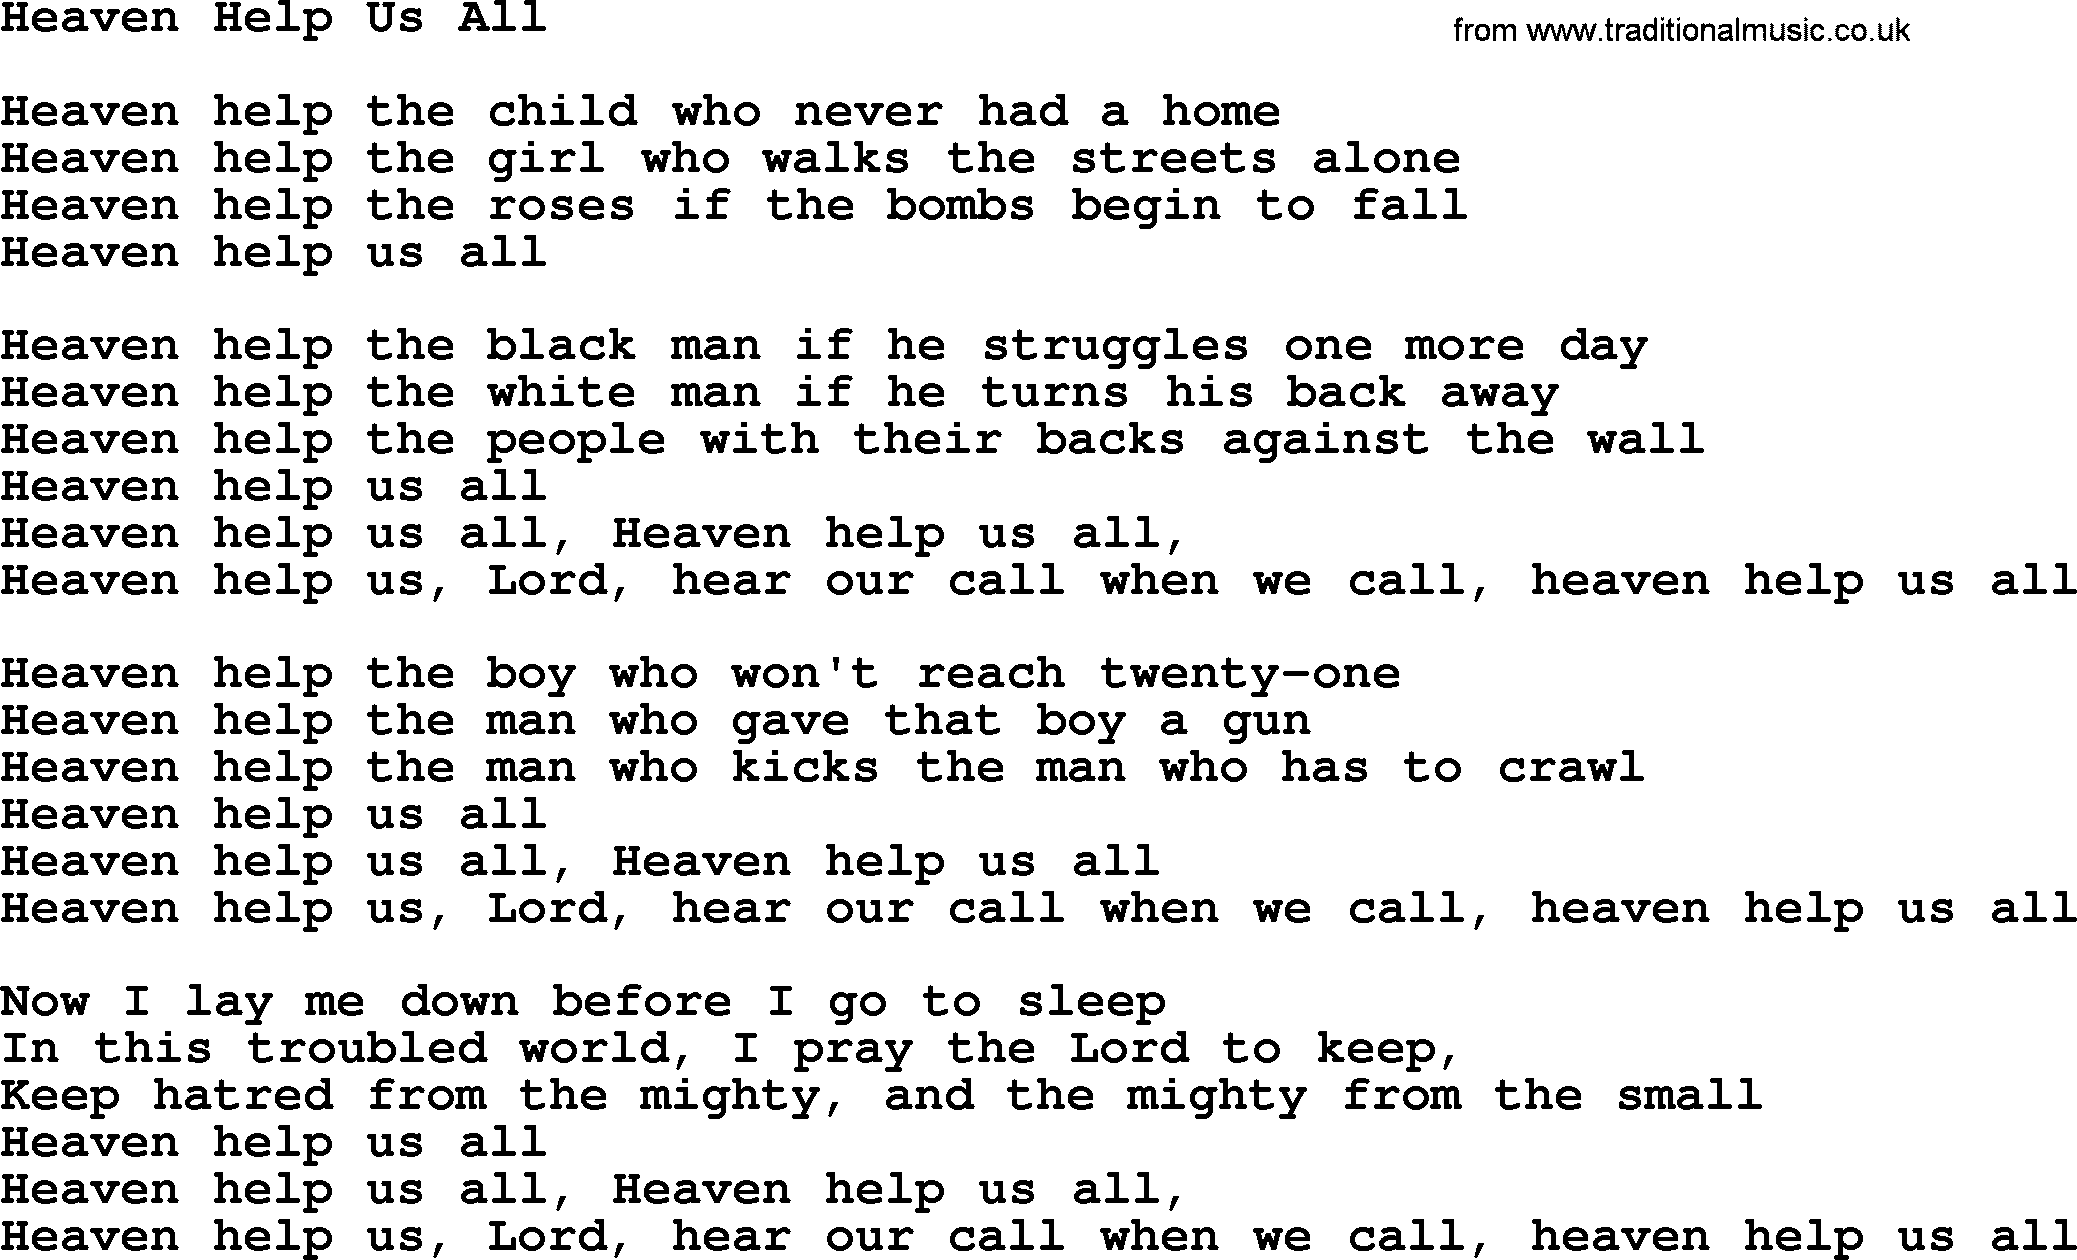 Joan Baez song Heaven Help Us All, lyrics